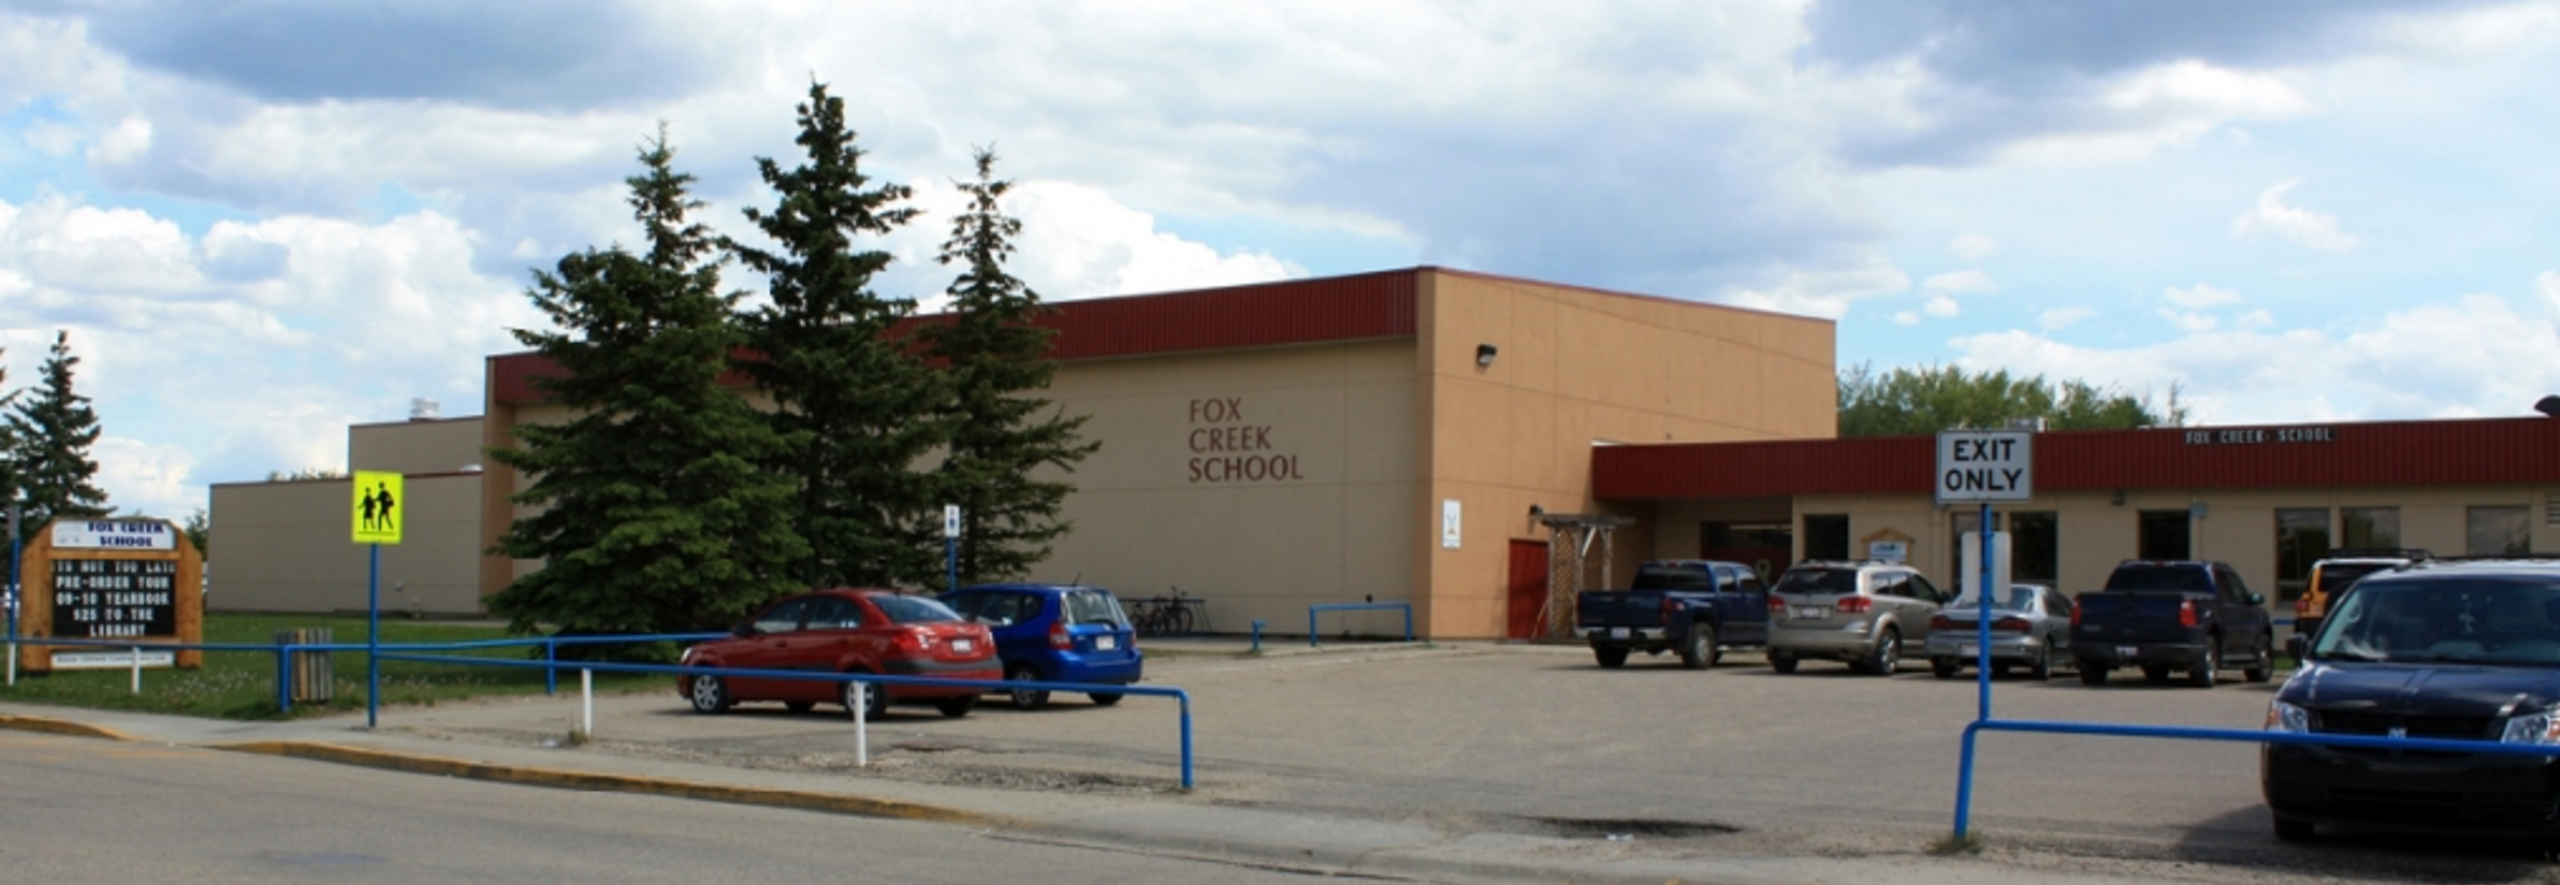 Fox Creek School Banner Photo